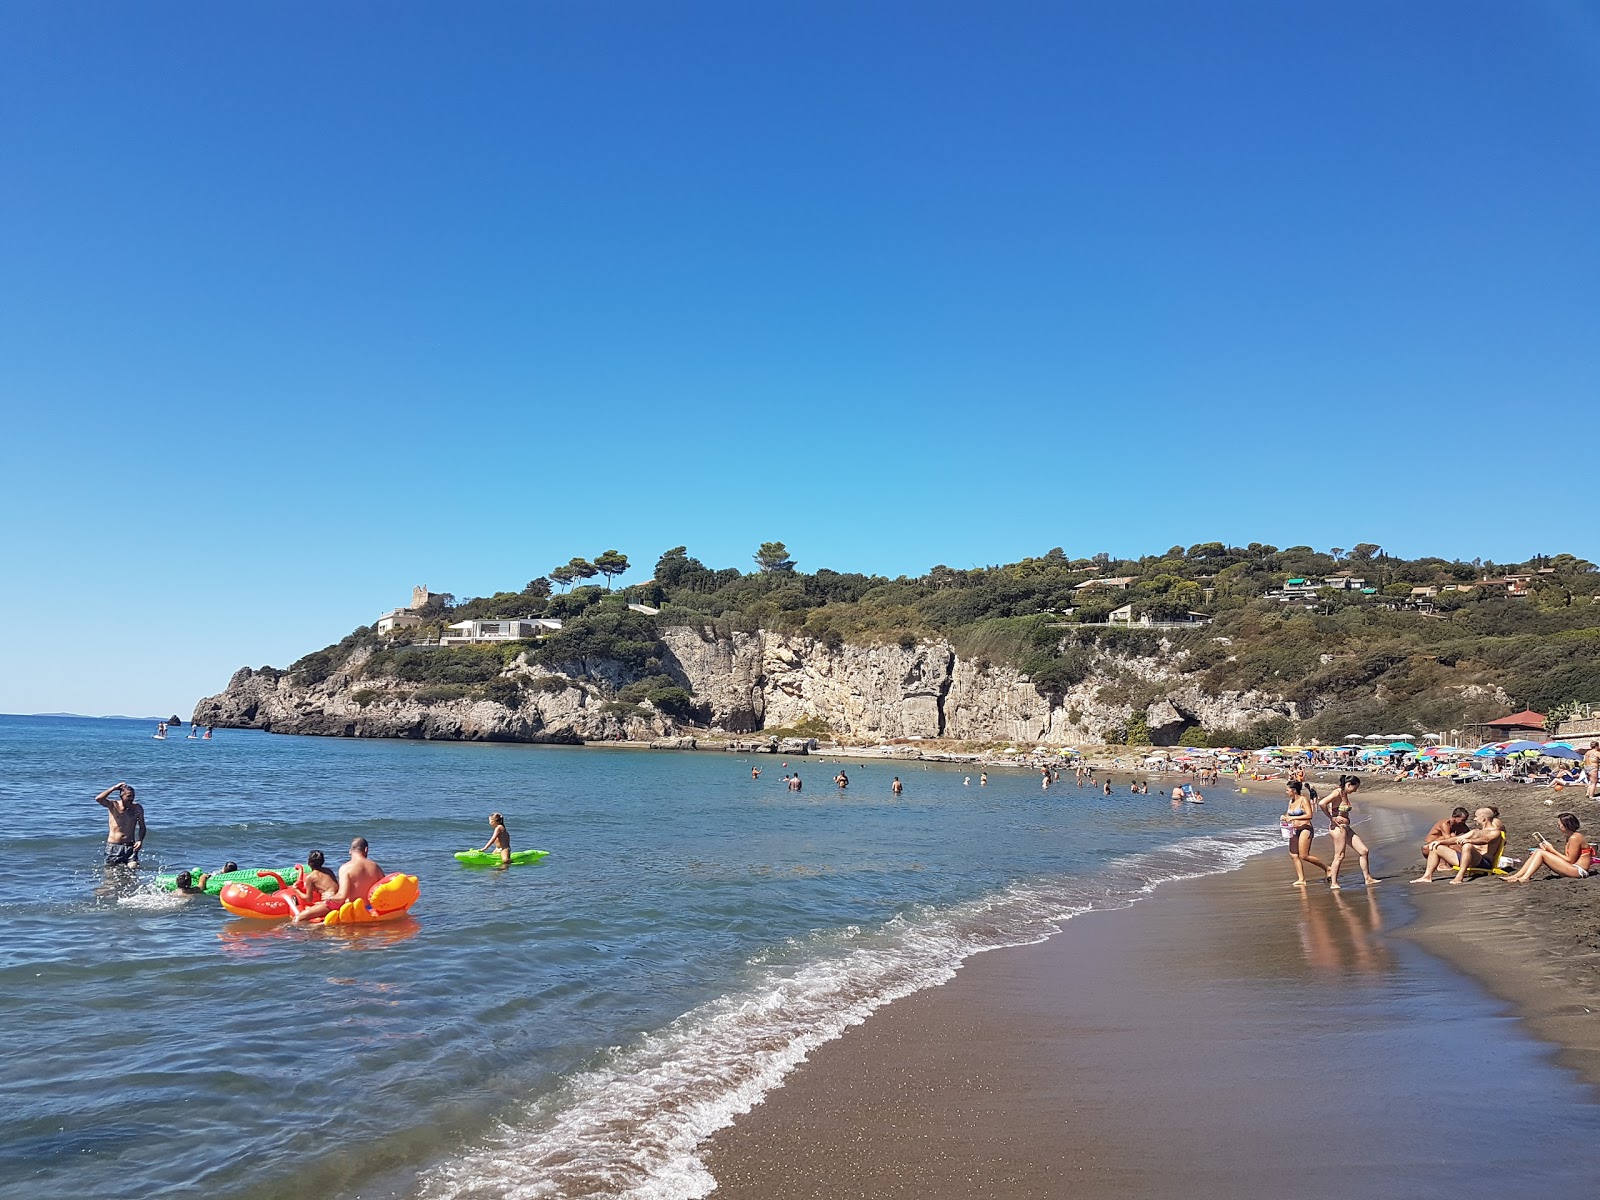 Fotografie cu Ansedonia beach cu nivelul de curățenie in medie